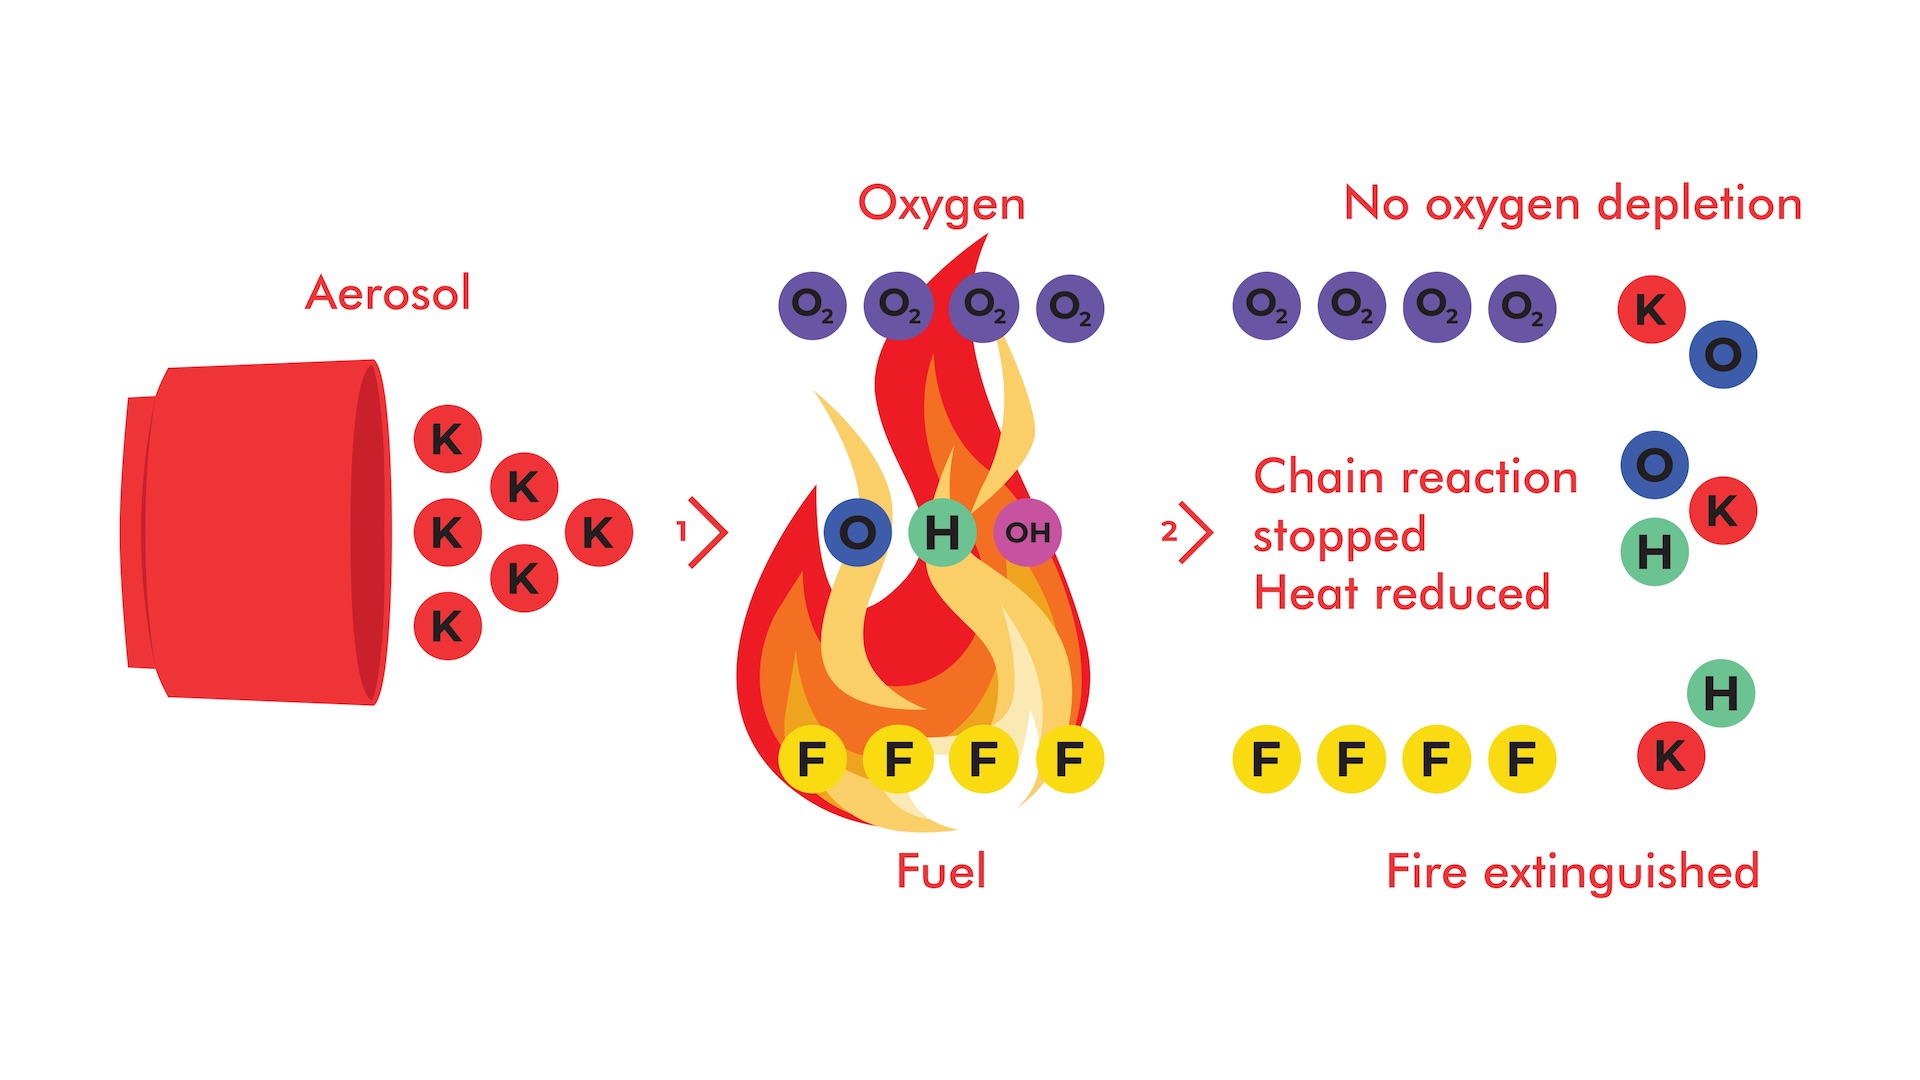 How does aerosol work as extinguishing agent